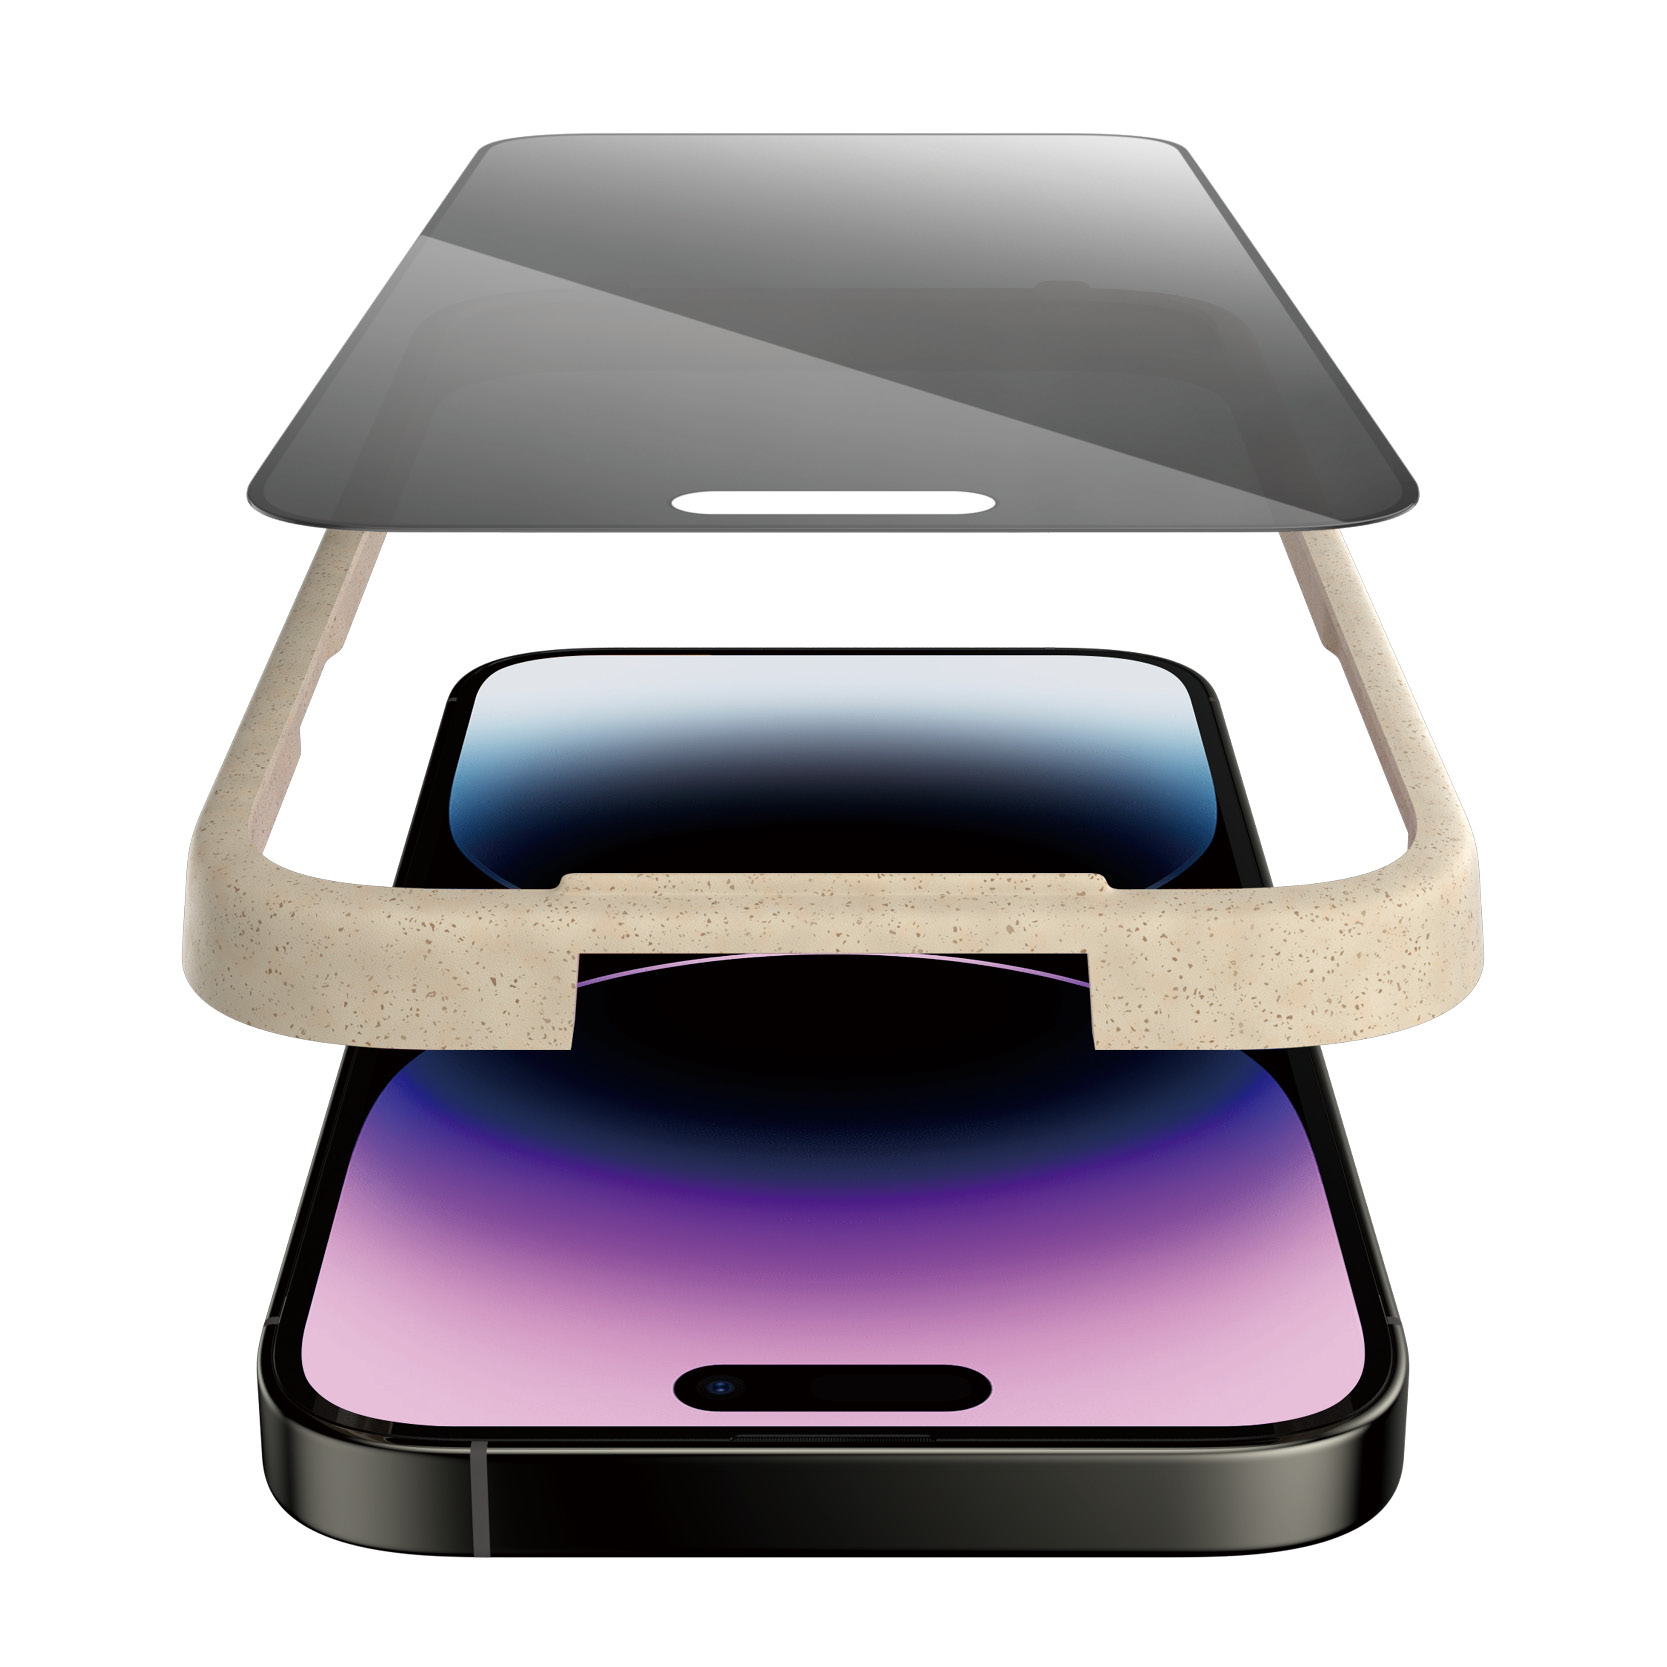 Protector de ecran de privacy PanzerGlass Apple iPhone 14 Pro Max | Potrivire ultra-larga cu. EasyAligner thumb